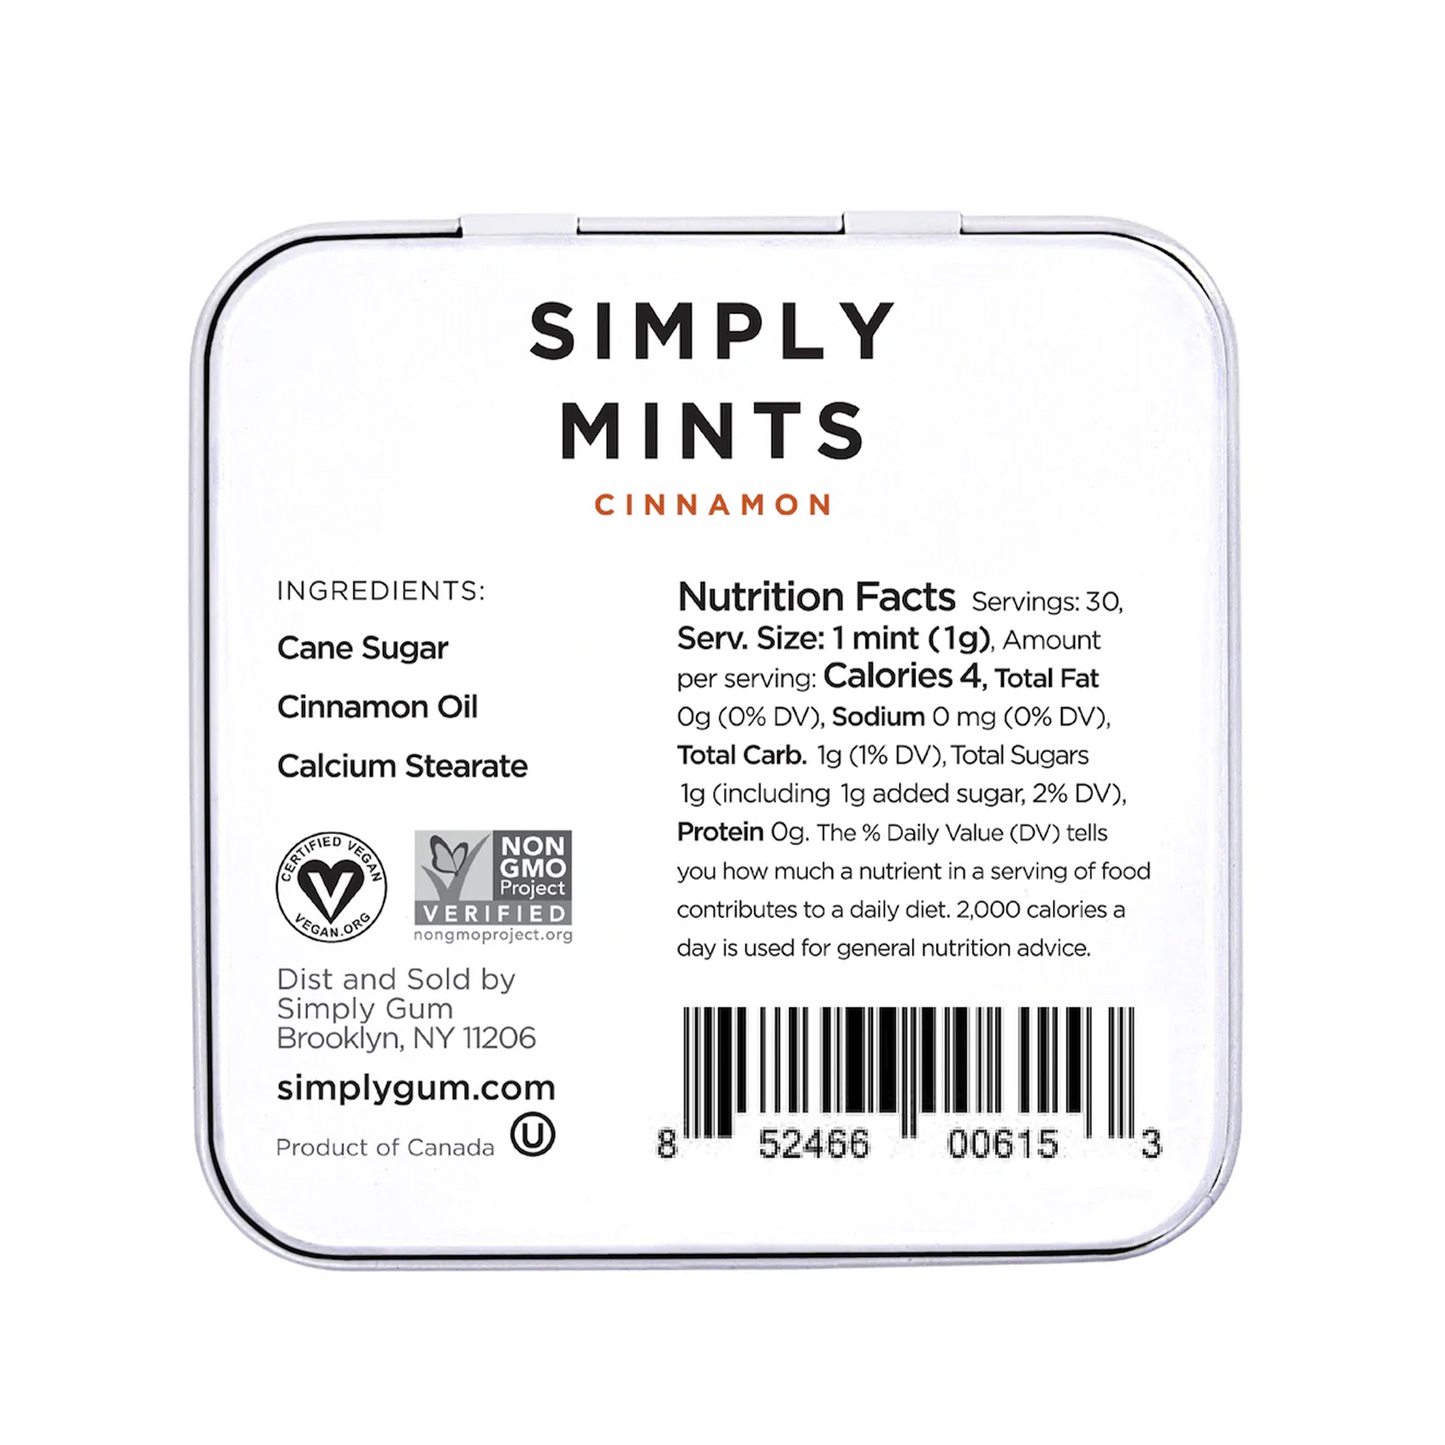 Simply Mints - Cinnamon (6 tins)